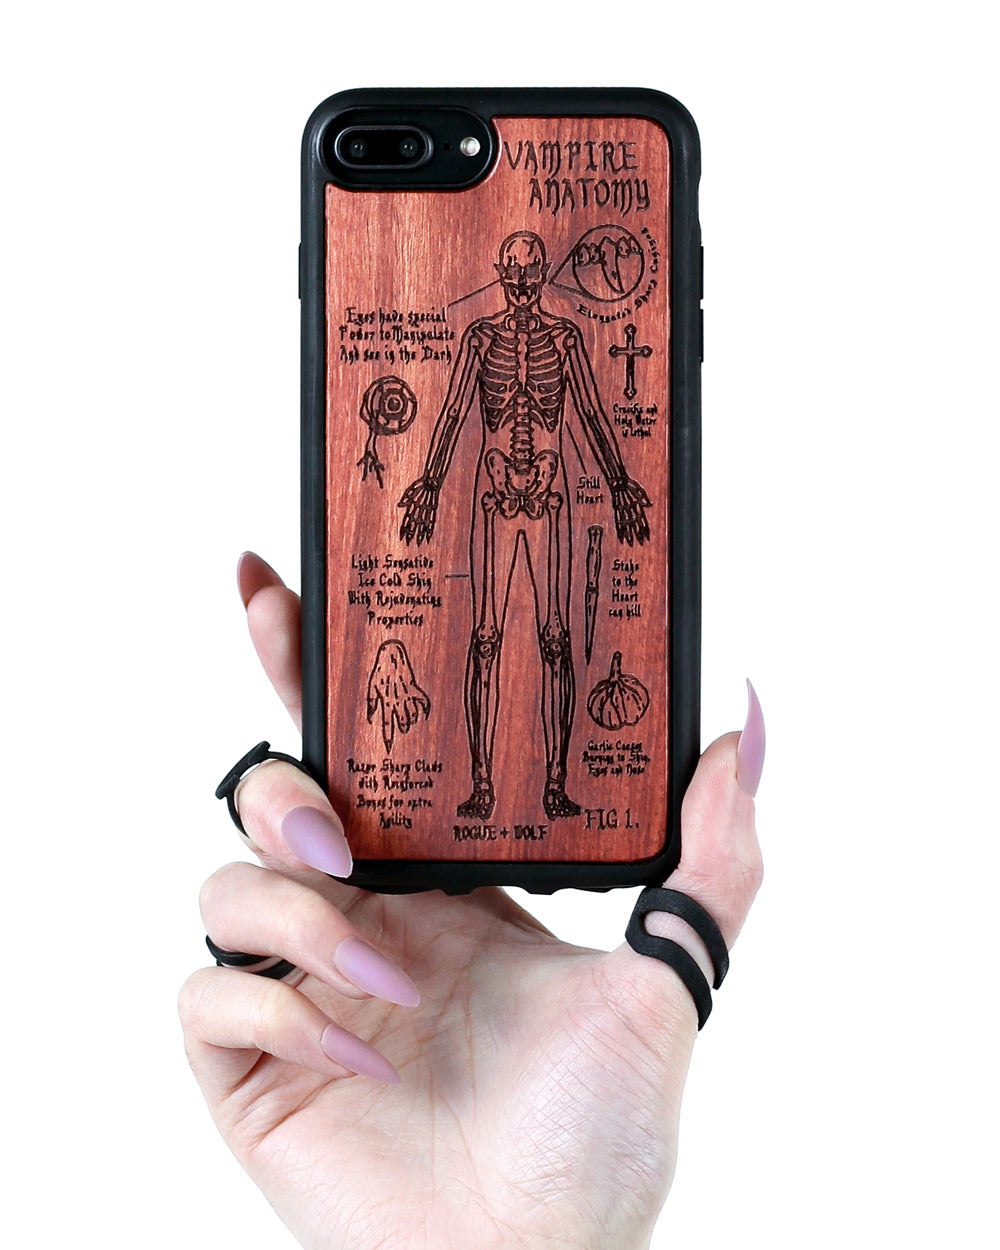 Vampire Anatomy - Engraved Rose Wood Phone Case